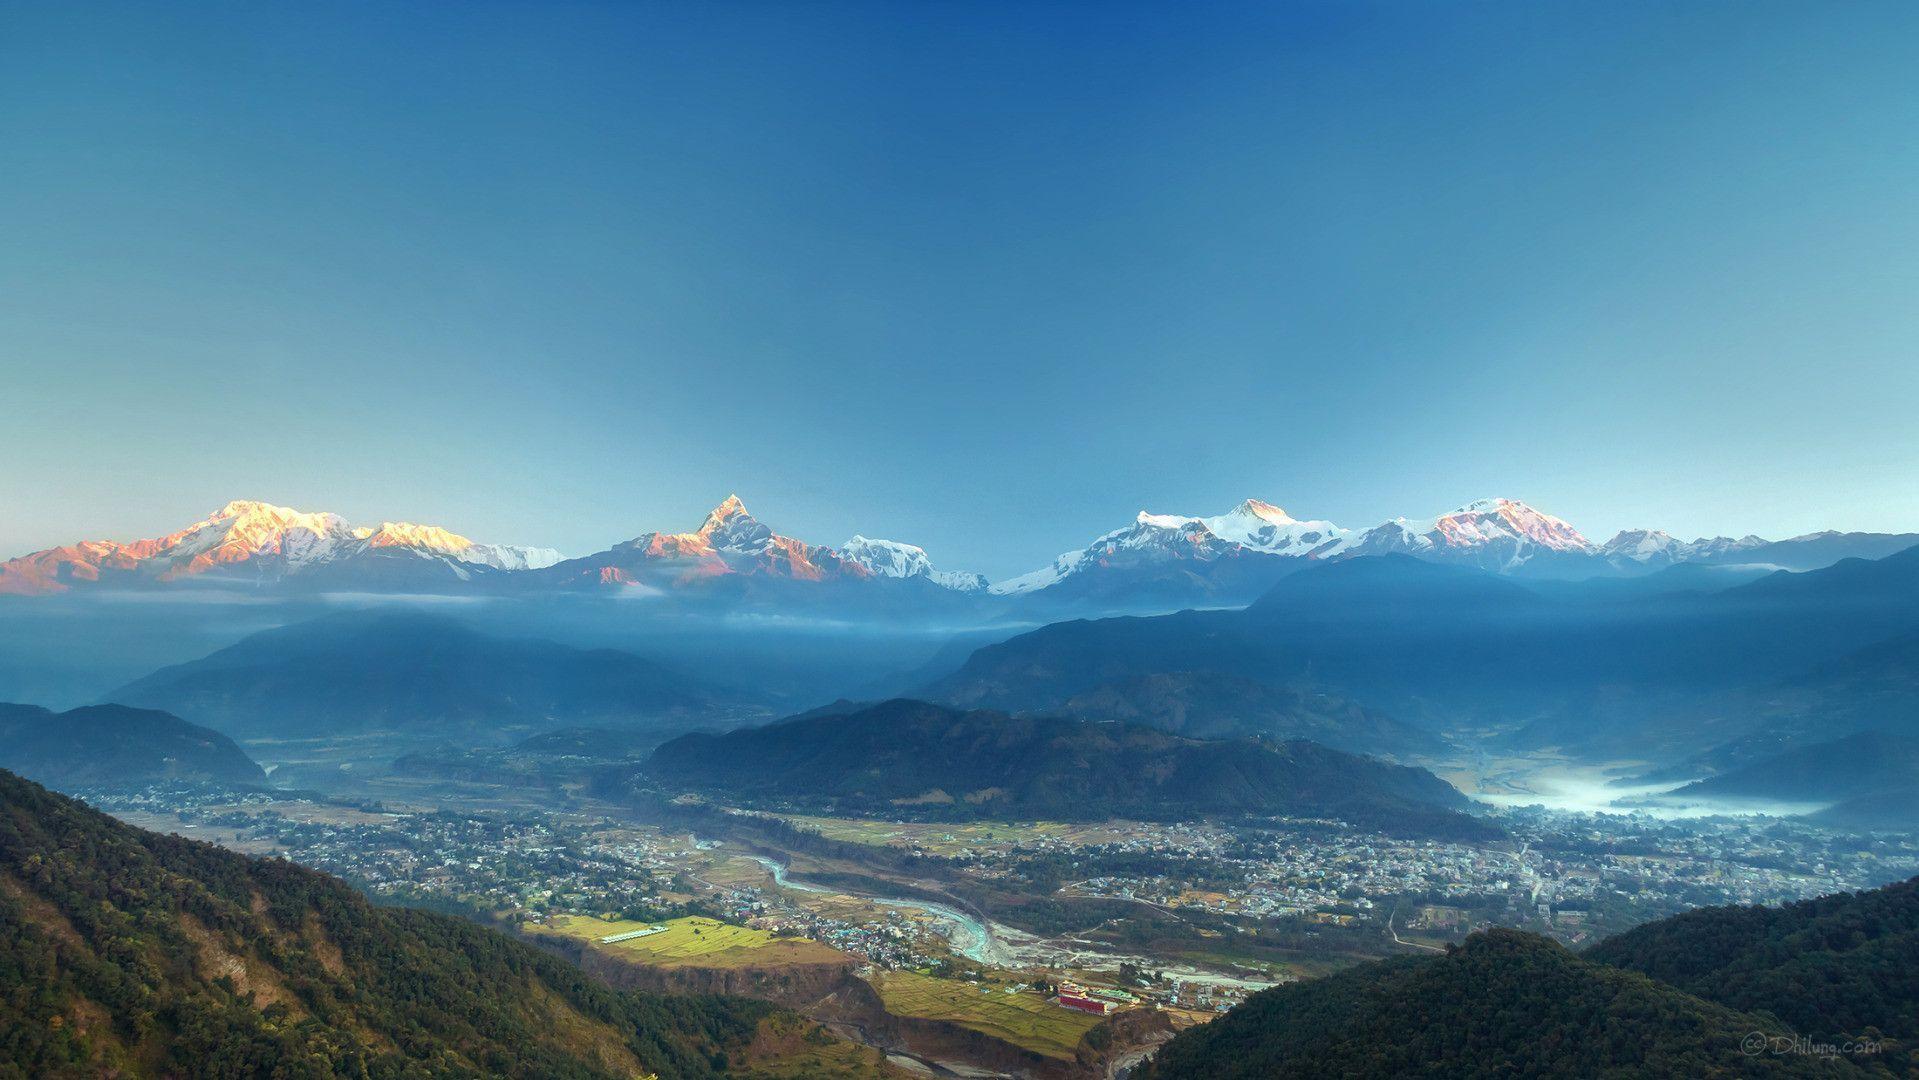 Sarangkot Sunrise, Pokhara, Nepal widescreen wallpaper. Wide